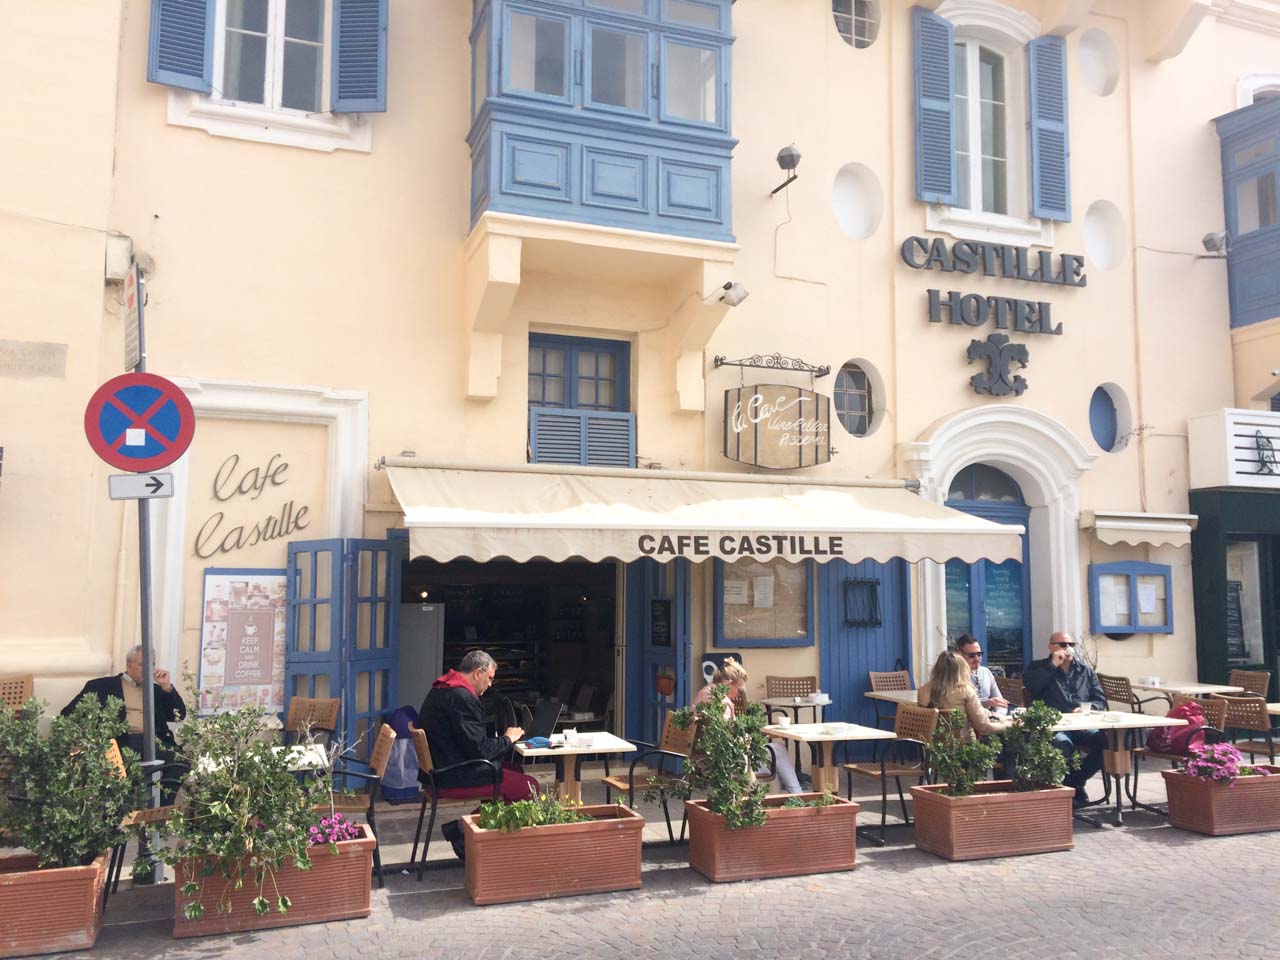 People sitting outside Cafe Castille in Valletta, Malta